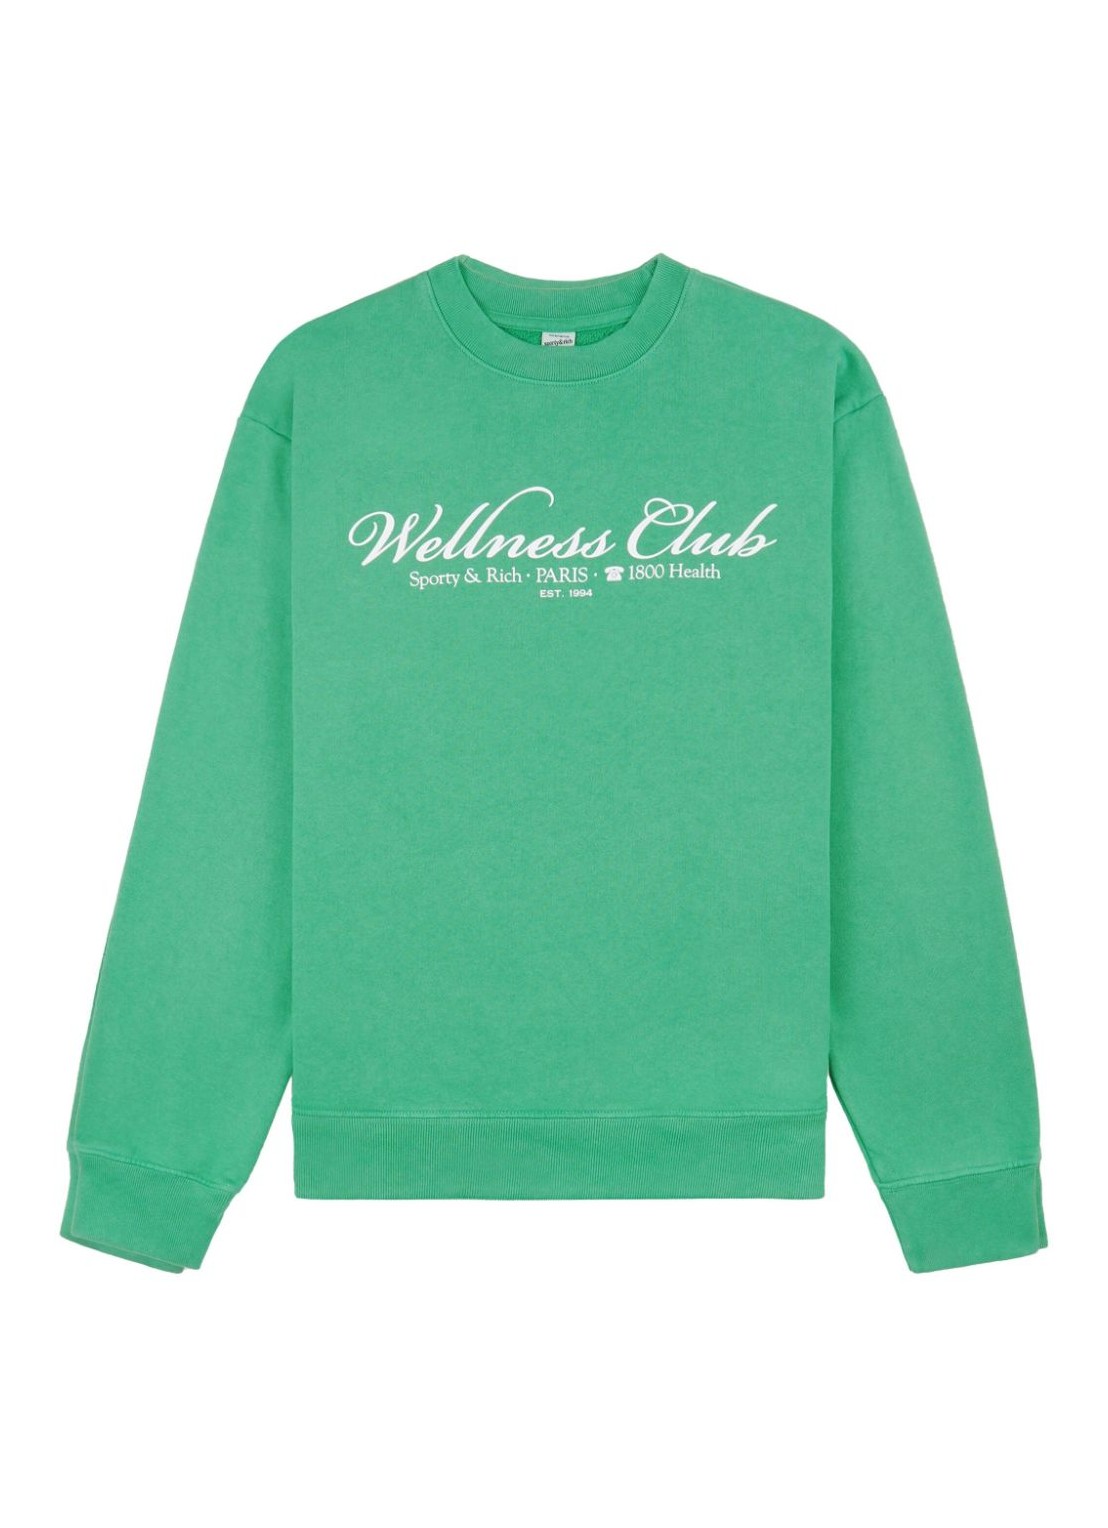 Sudadera sporty & rich sweater woman1800 health crewneck - ws067s405hv verde talla M
 